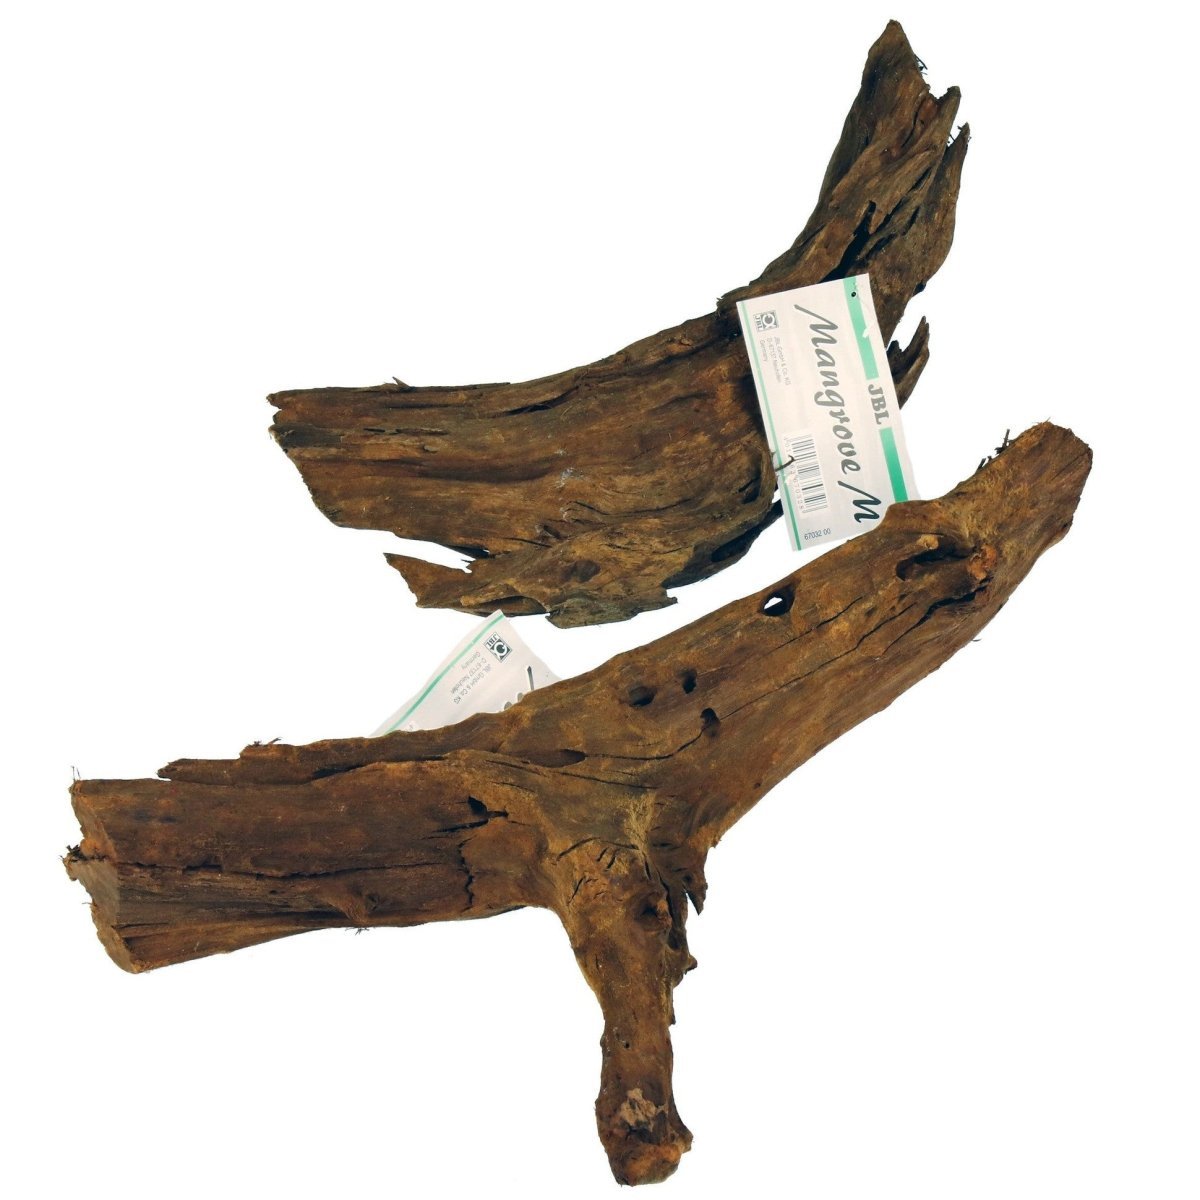 JBL Mangrovenwurzel - Mangrovenholz-Wurzel für Aquarien 